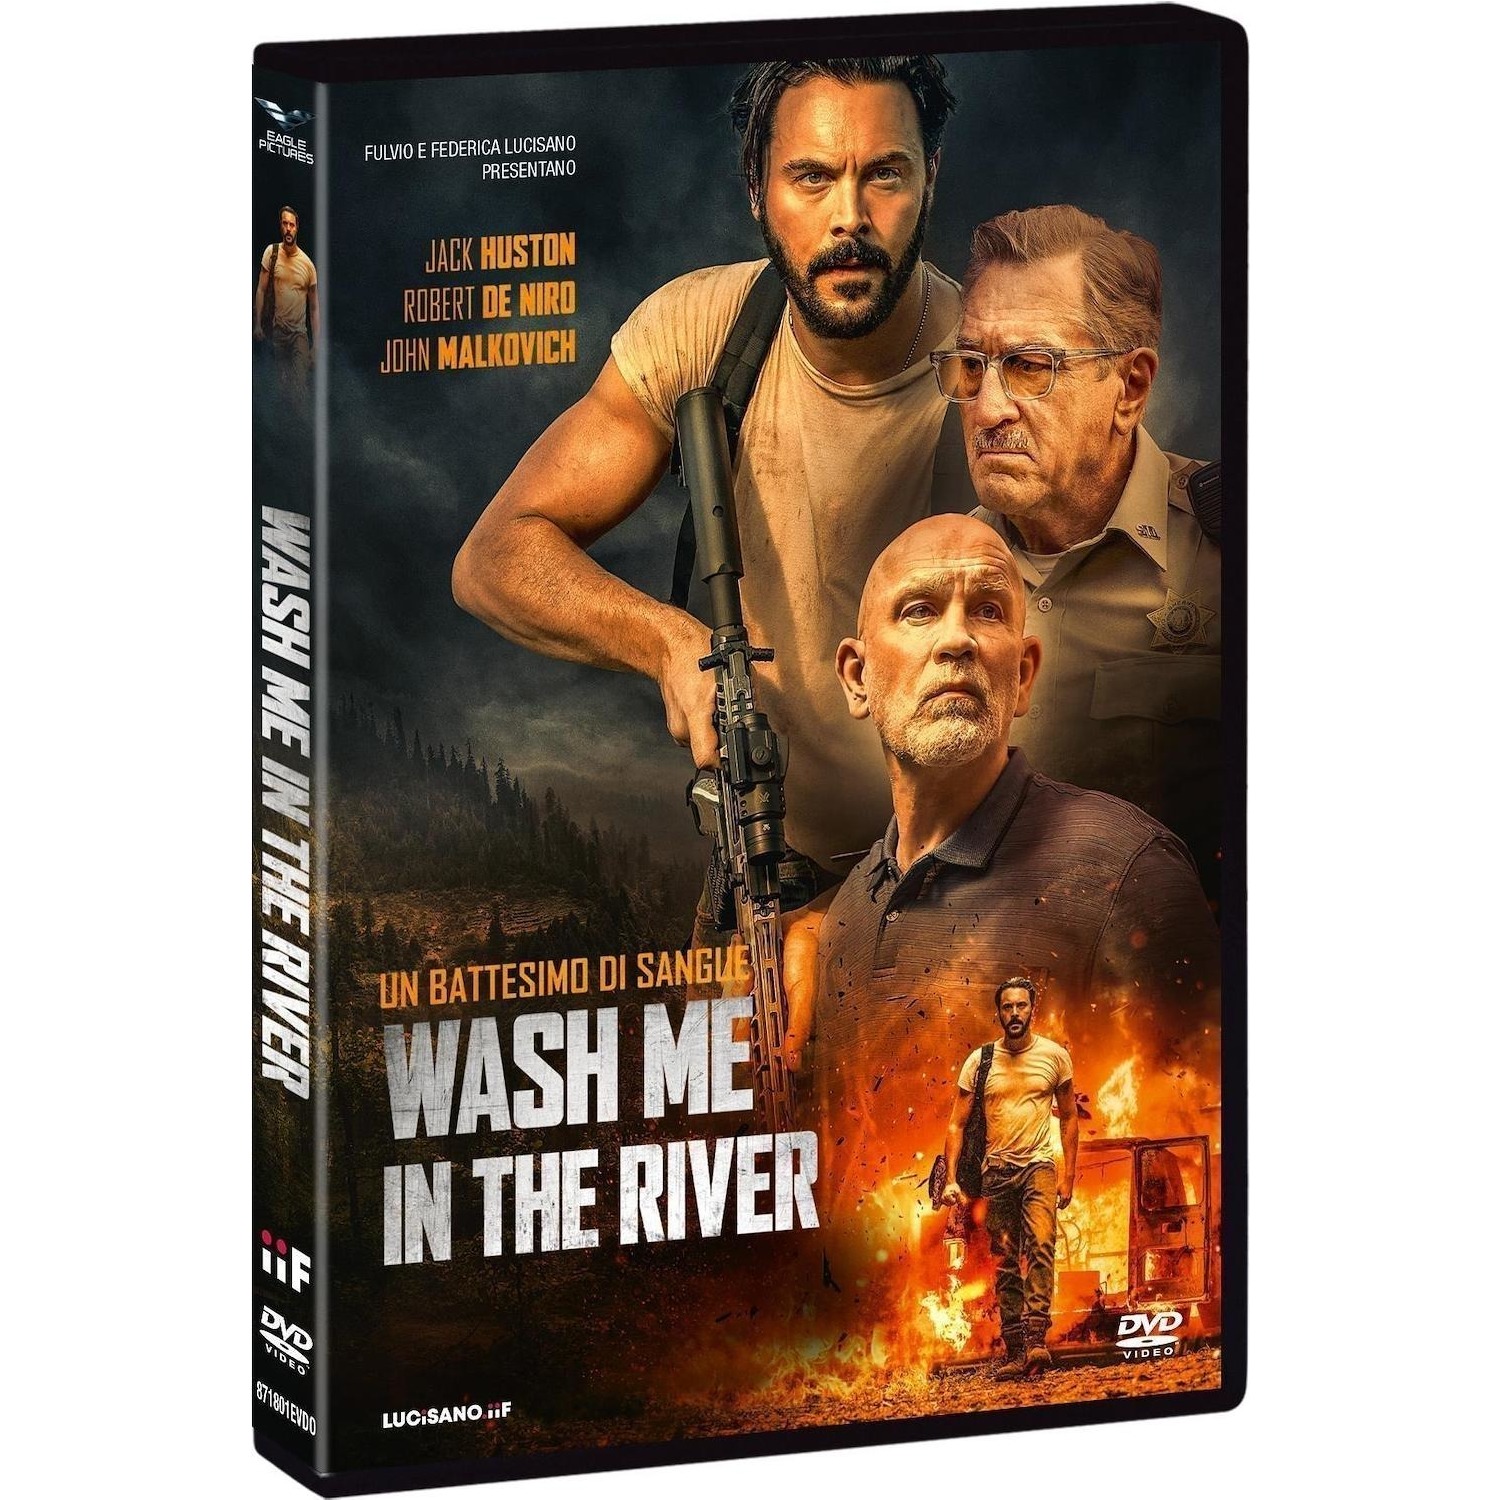 Immagine per DVD Wash me in the river da DIMOStore